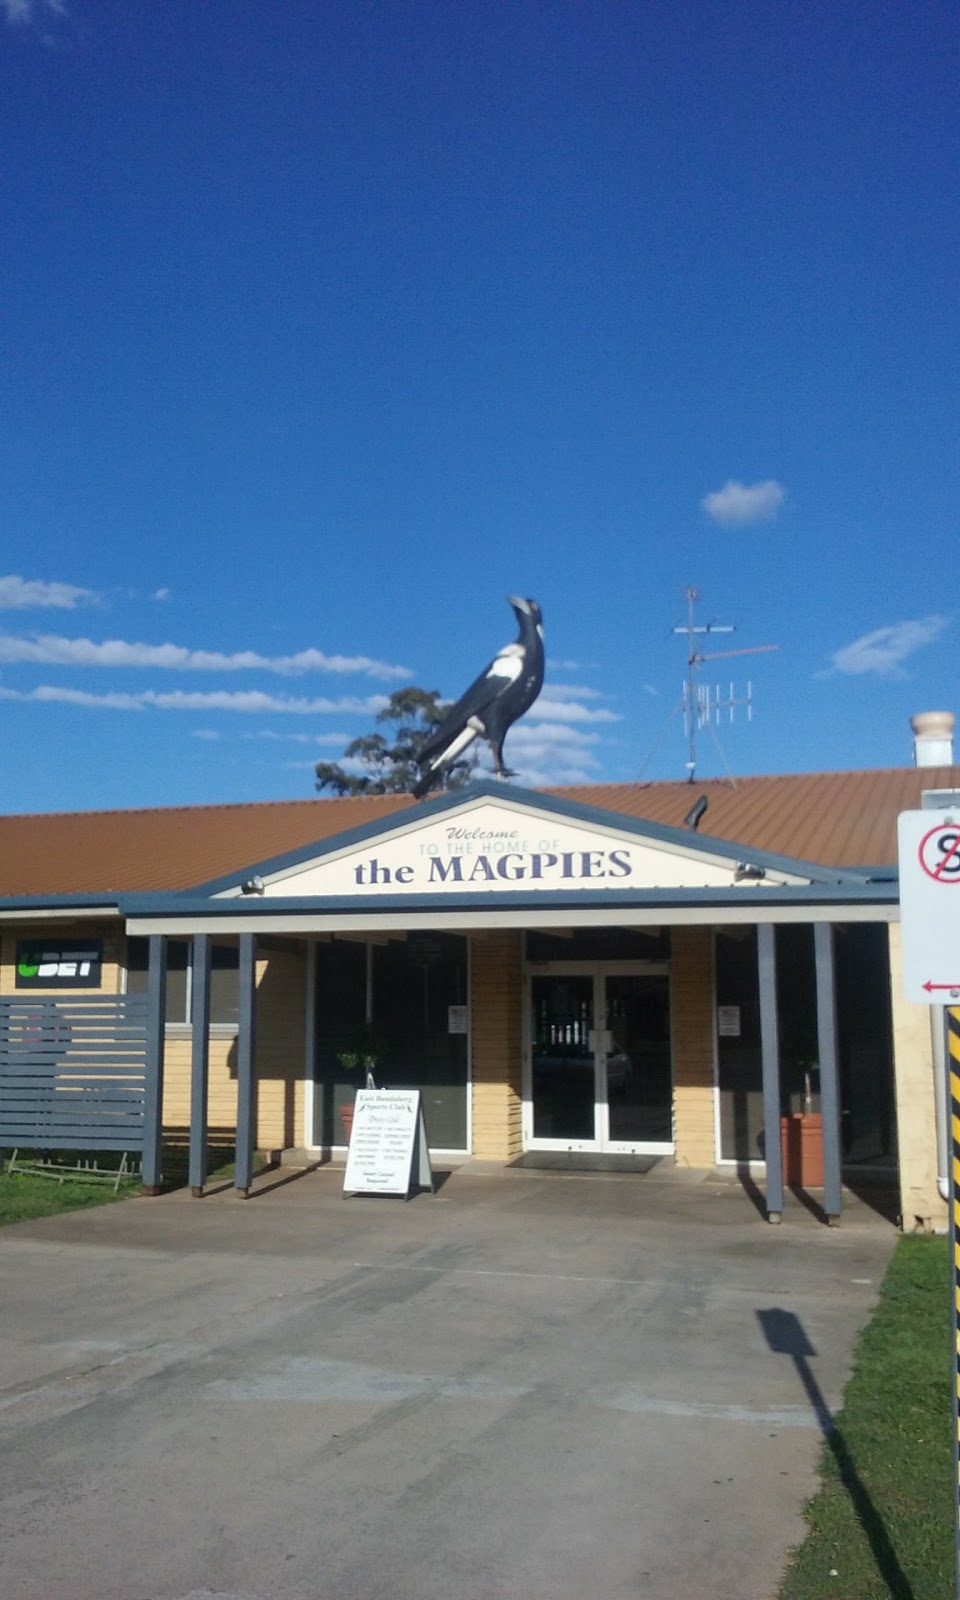 East Bundaberg Sports Club | restaurant | 21 Eastgate St, Bundaberg Central QLD 4670, Australia | 0741513133 OR +61 7 4151 3133